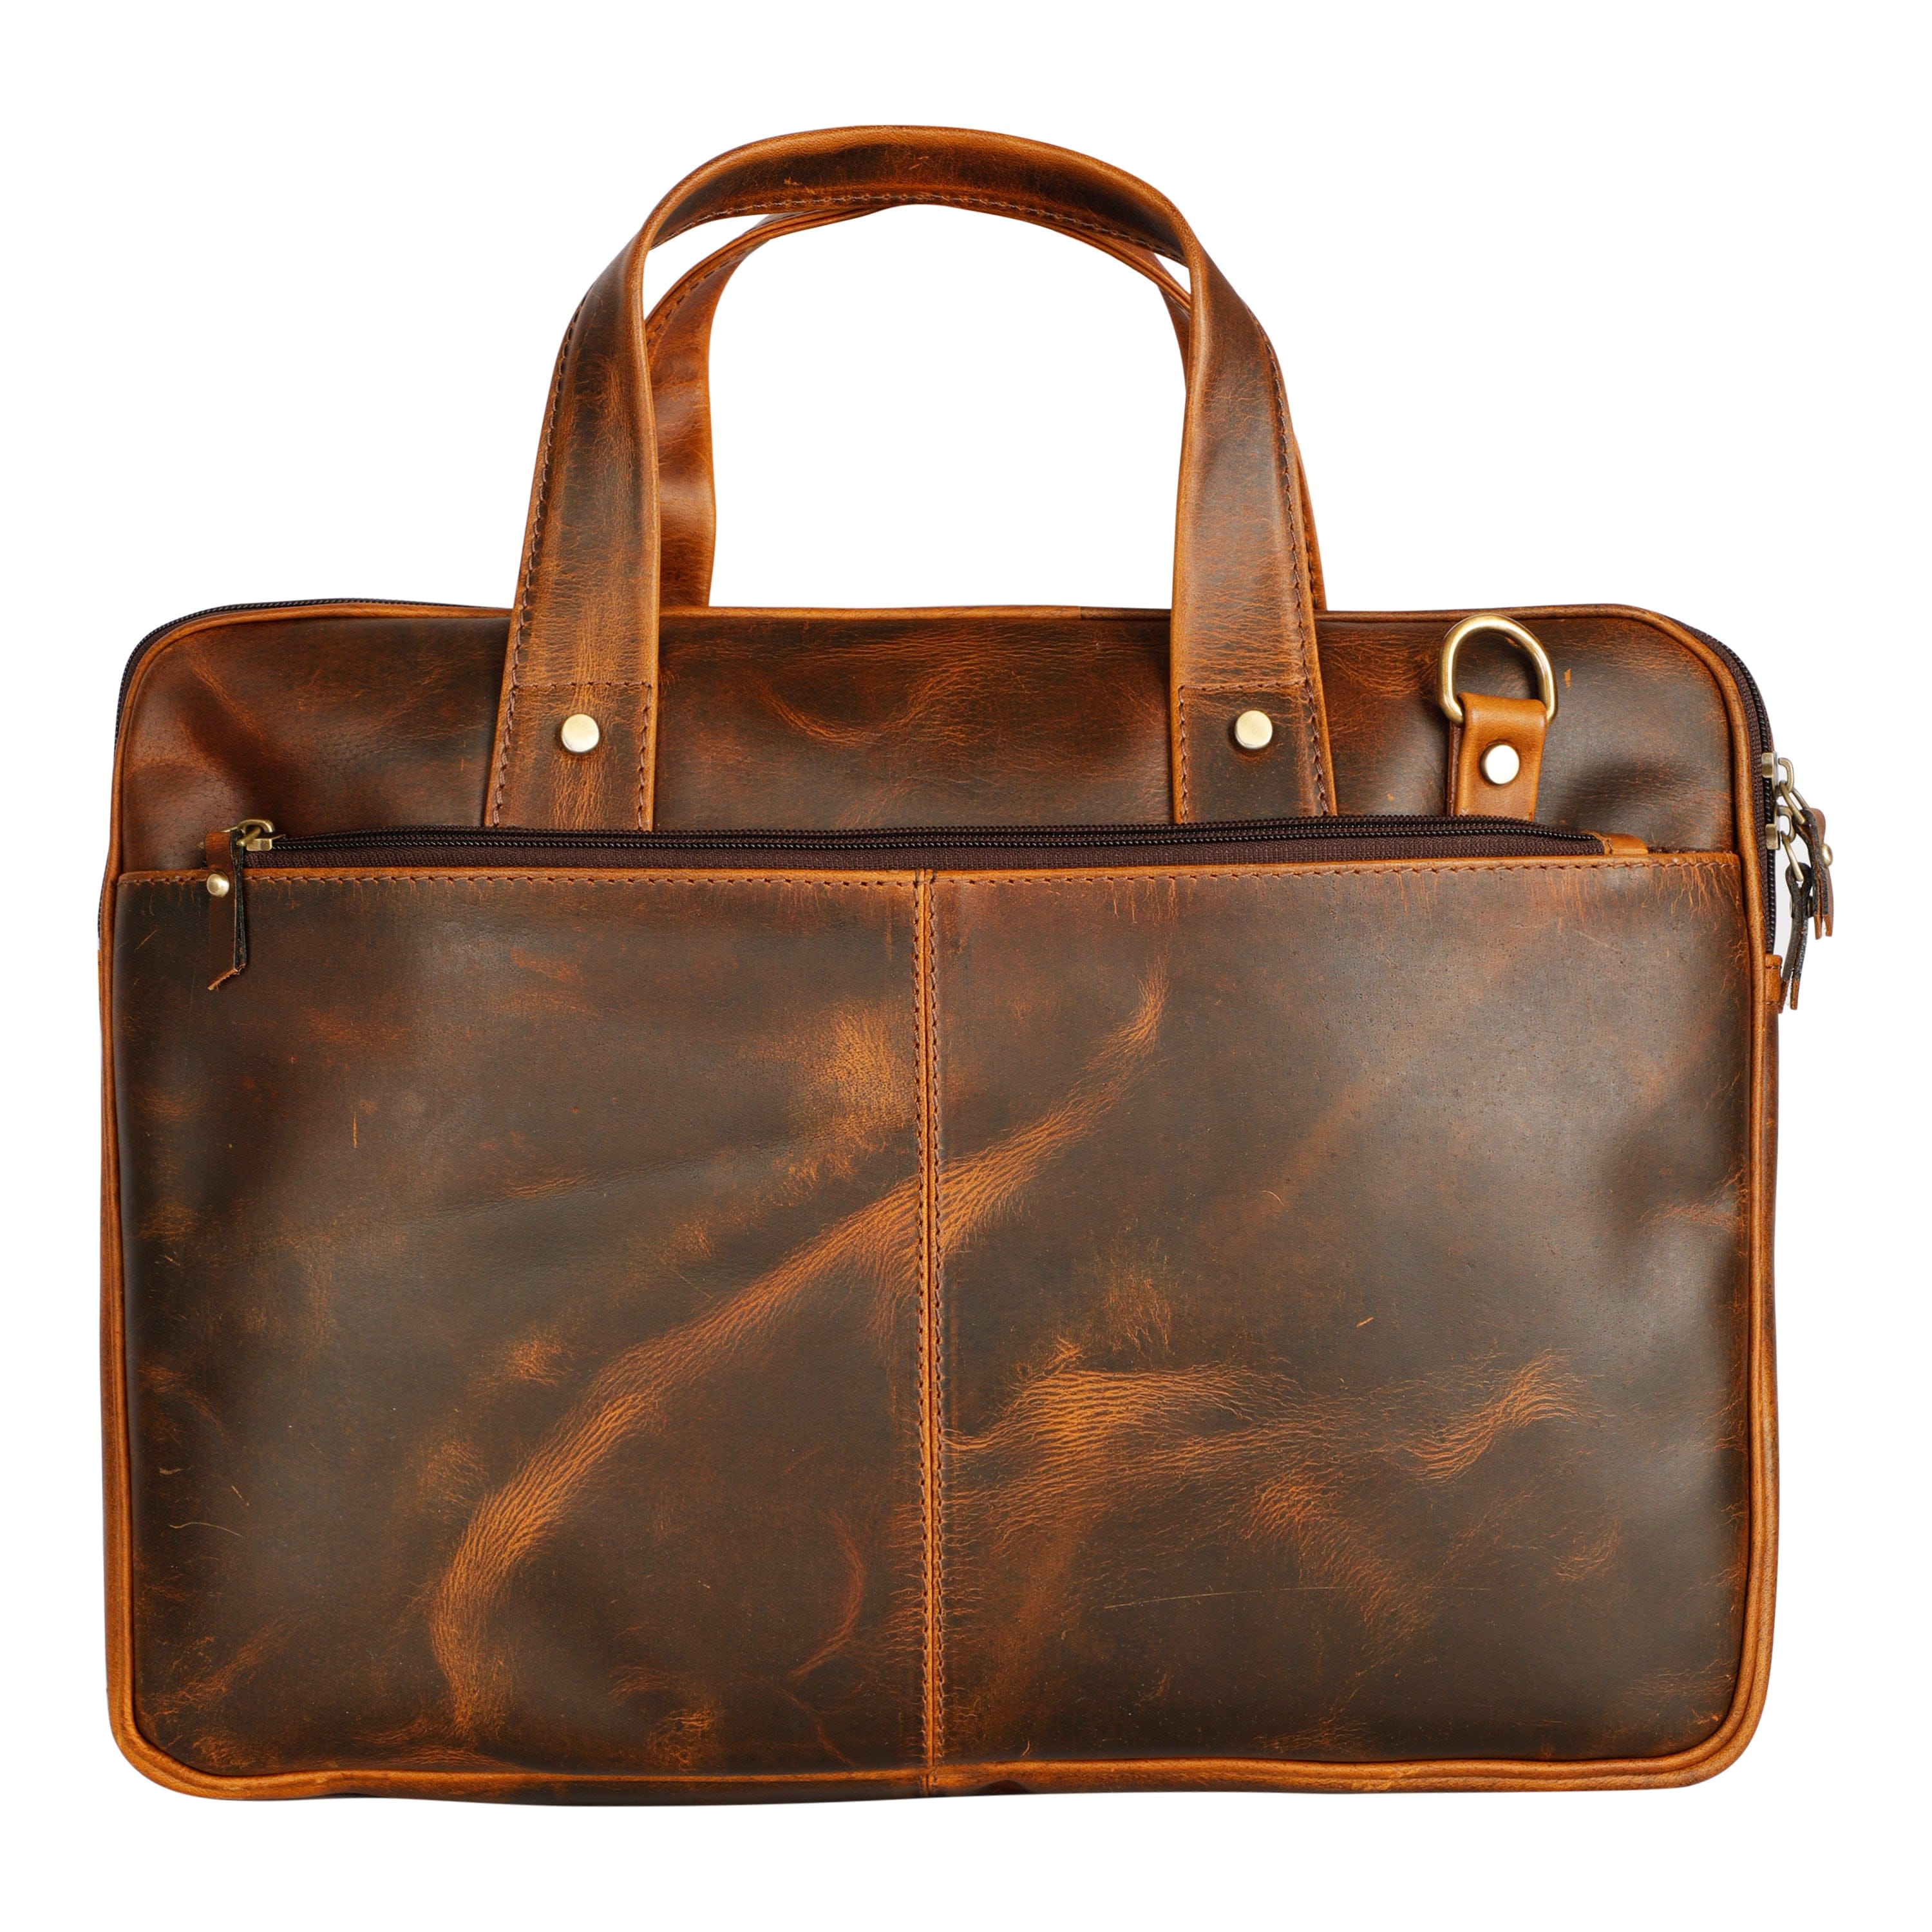 BUCKLED HUNTER LEATHER LAPTOP BAG - Kinnoti genuine leather laptop bag